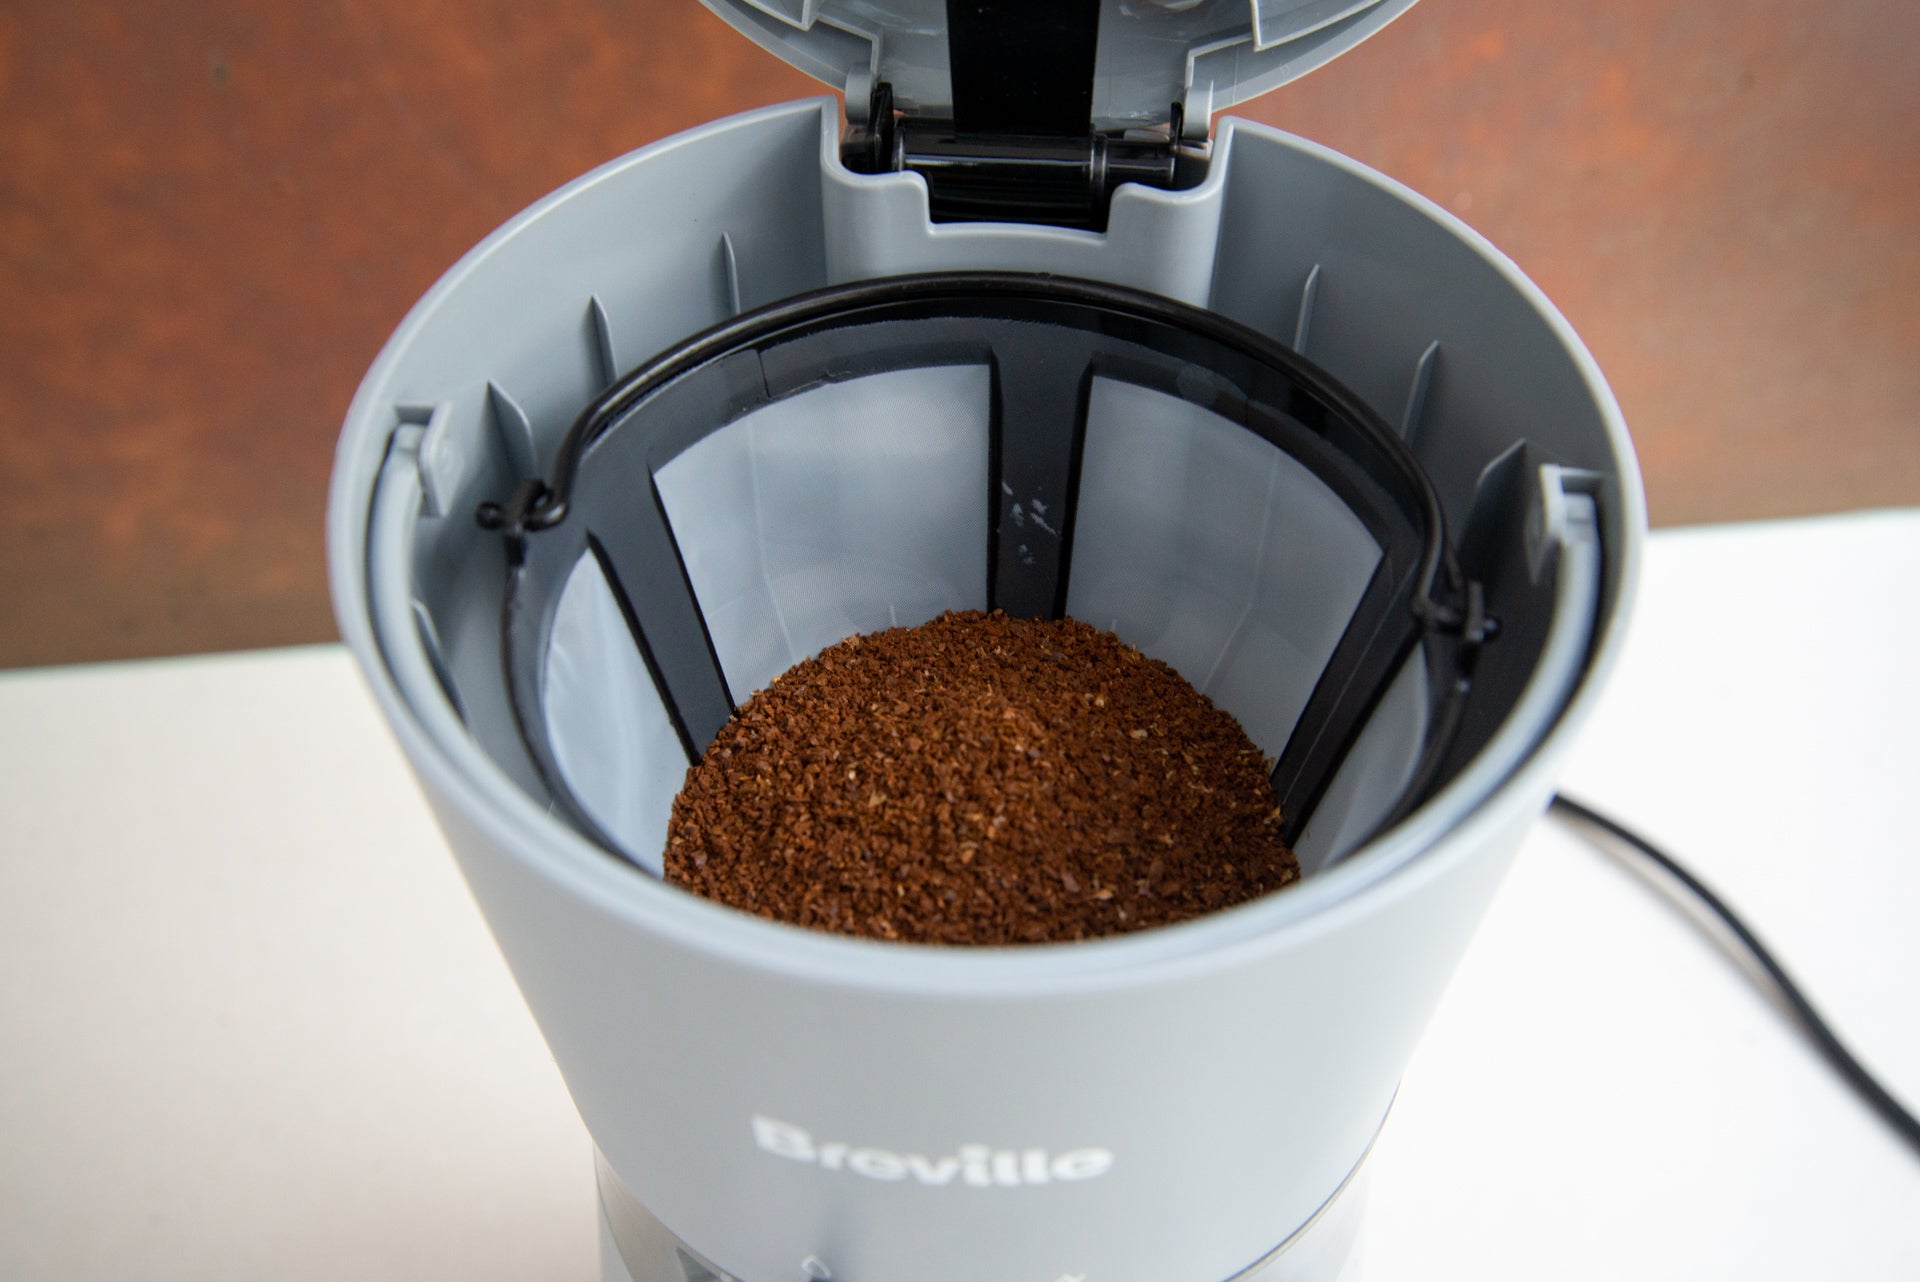 https://www.trustedreviews.com/wp-content/uploads/sites/54/2021/09/Breville-Iced-Coffee-Maker-8.jpg